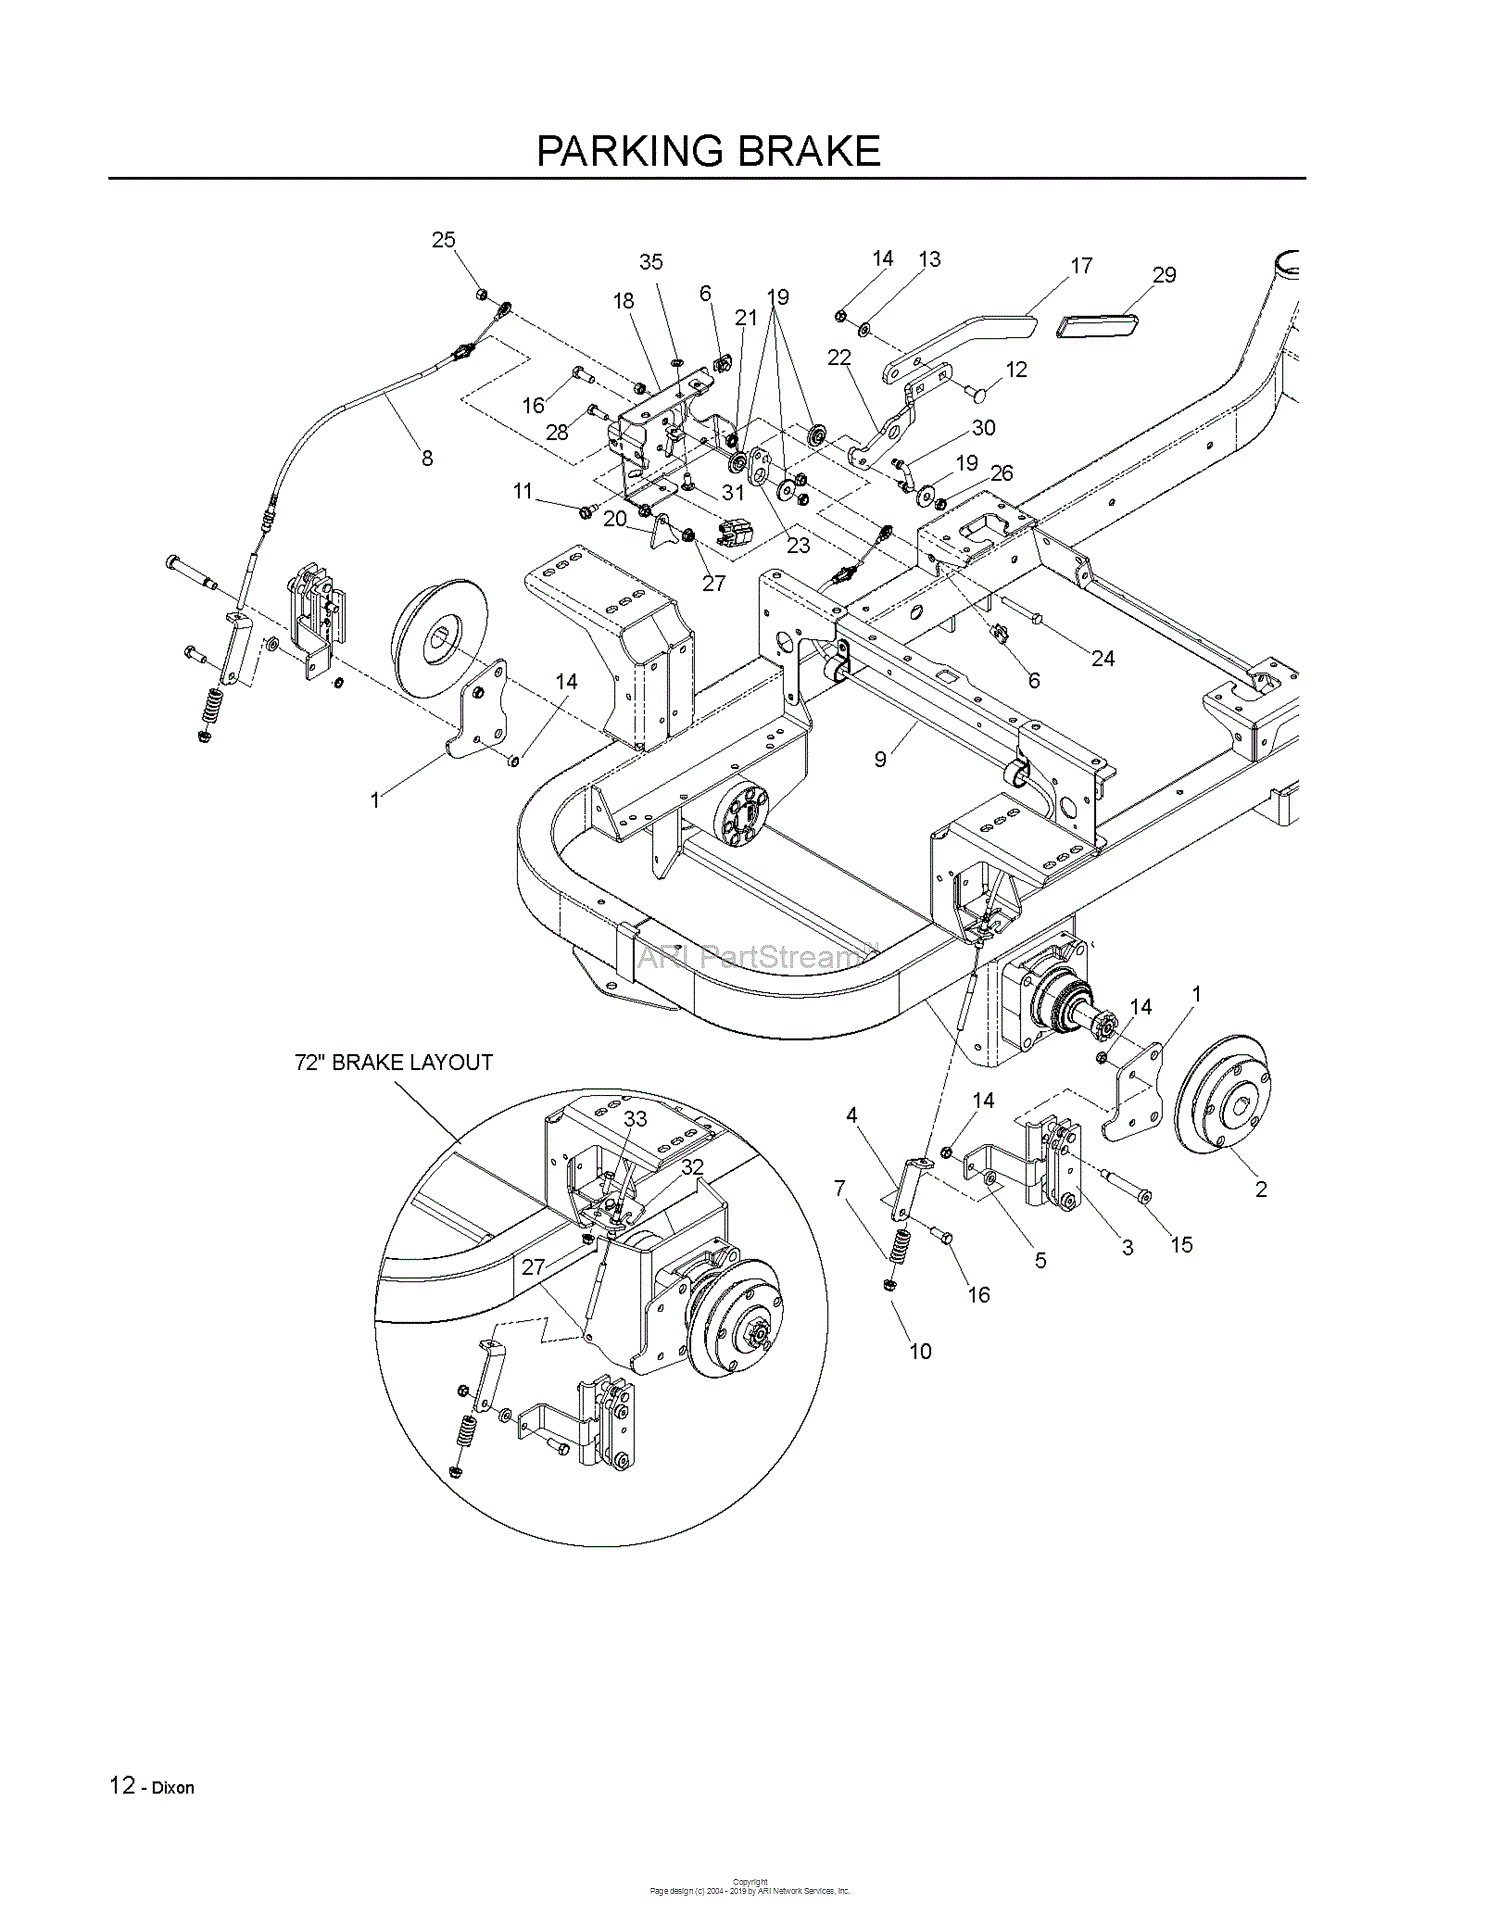 Dixon RAM ULTRA 52 - 966985302 (2009-01) Parts Diagram for PARKING BRAKE